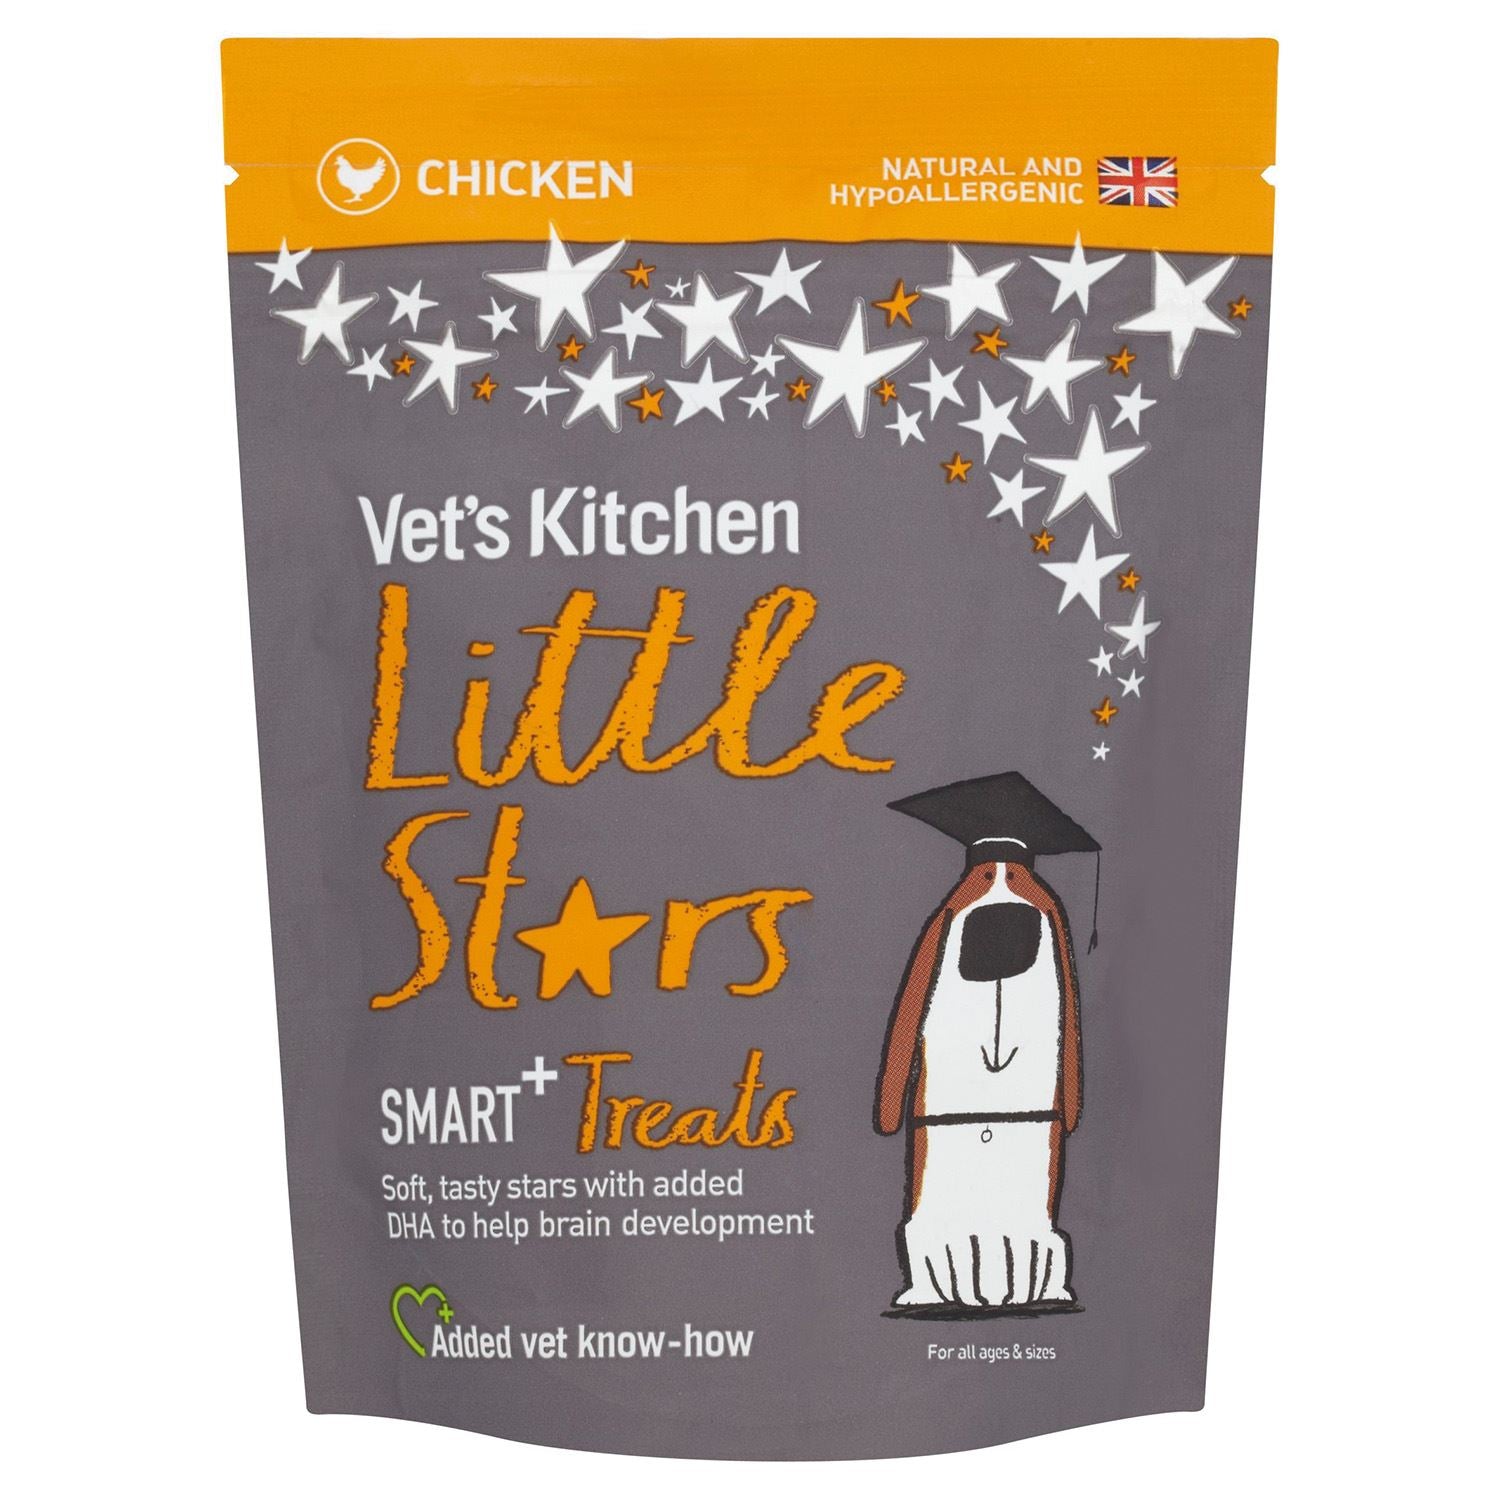 Vets Kitchen Little Stars Dog Treat Chicken Smart+ - Just Horse Riders